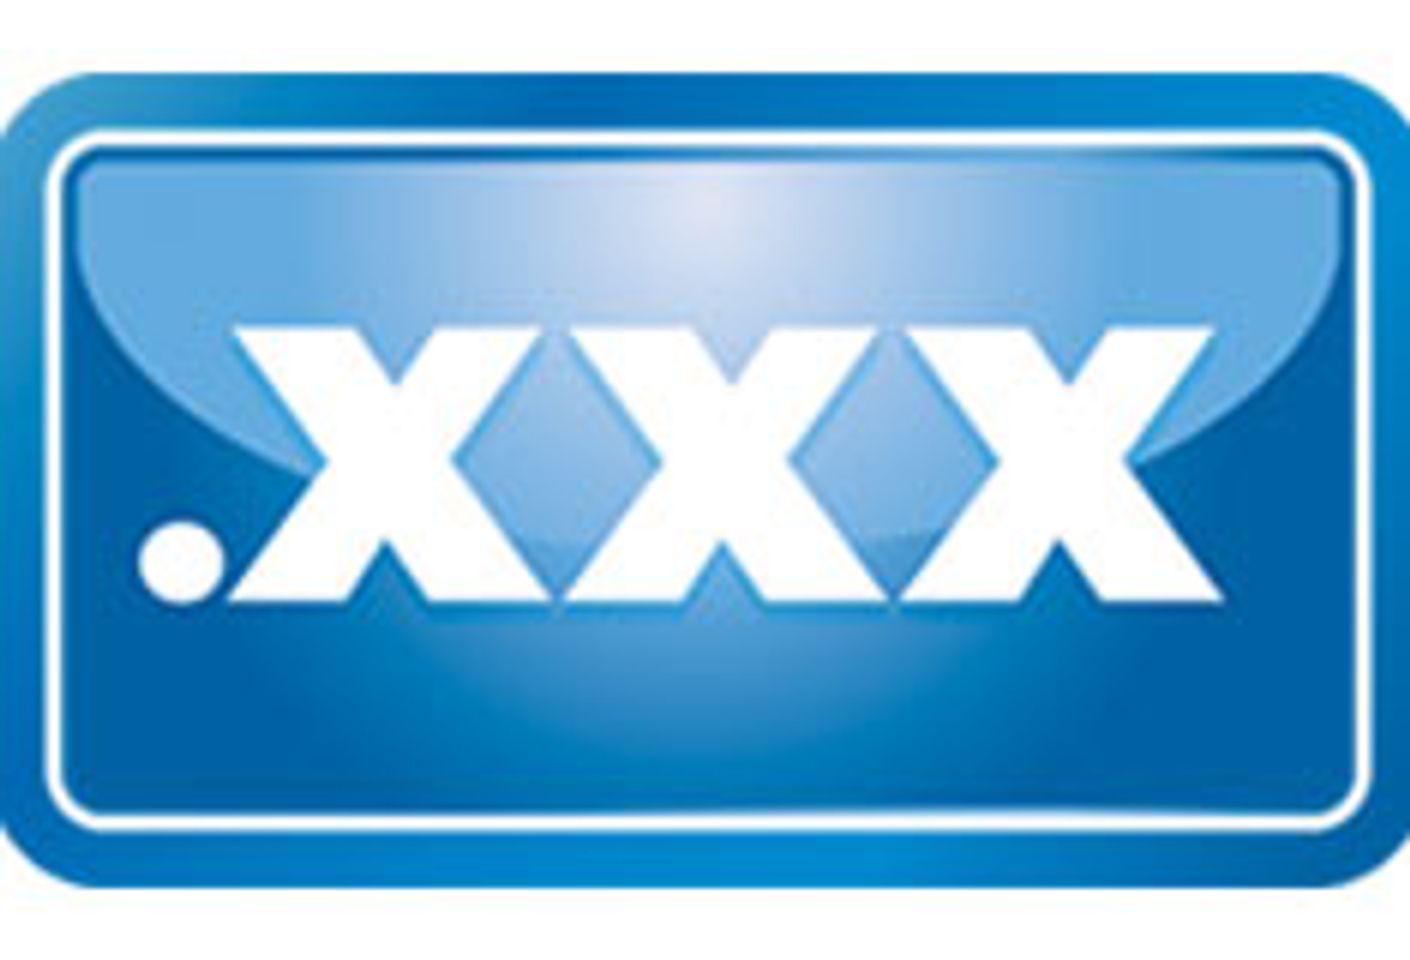 Twelve .XXX Domains Auctioned at T.R.A.F.F.I.C 2011 Tomorrow at 2 pm